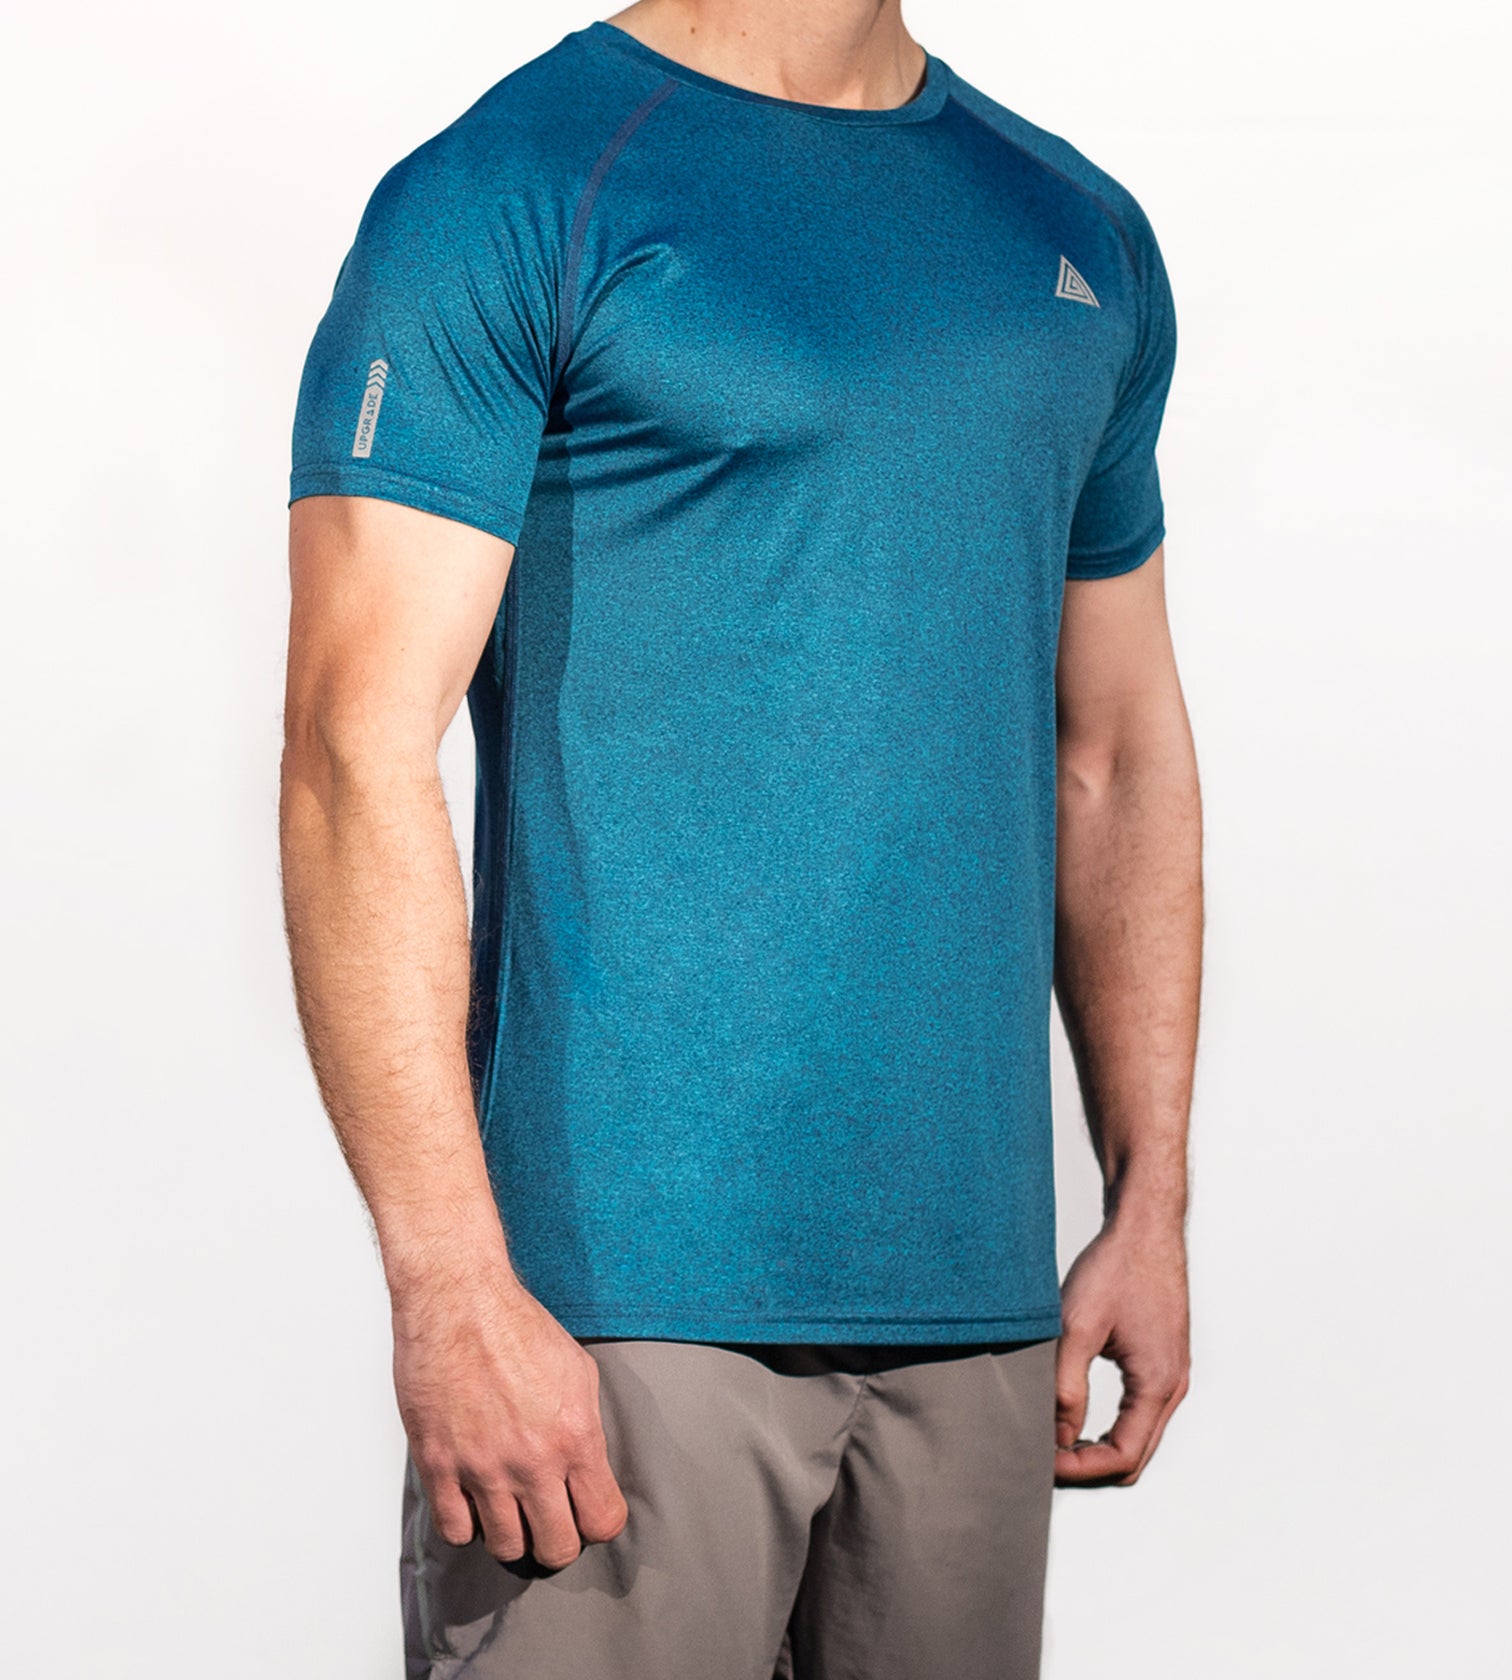 Camisetas tecnicas para running, trail running, crossfit, gym, trekking, de hombre - Upgrade Wear